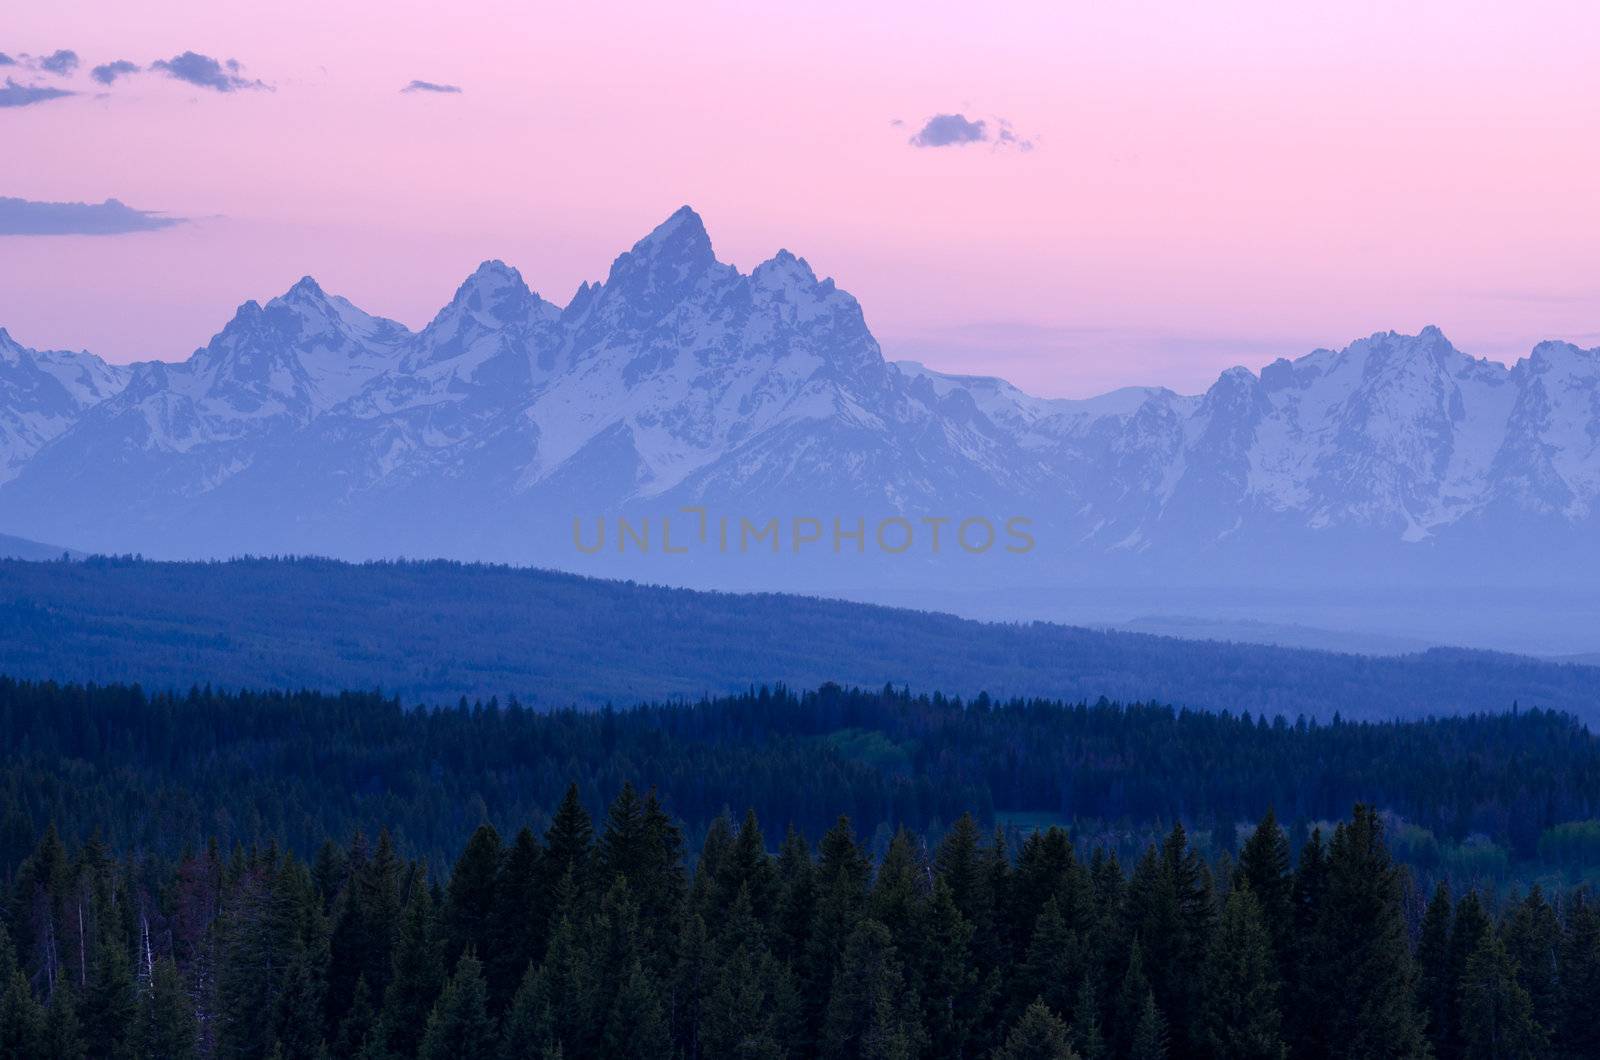 The Teton Mountains and forested ridges at twilight, Grand Teton National Park, Teton County, Wyoming, USA